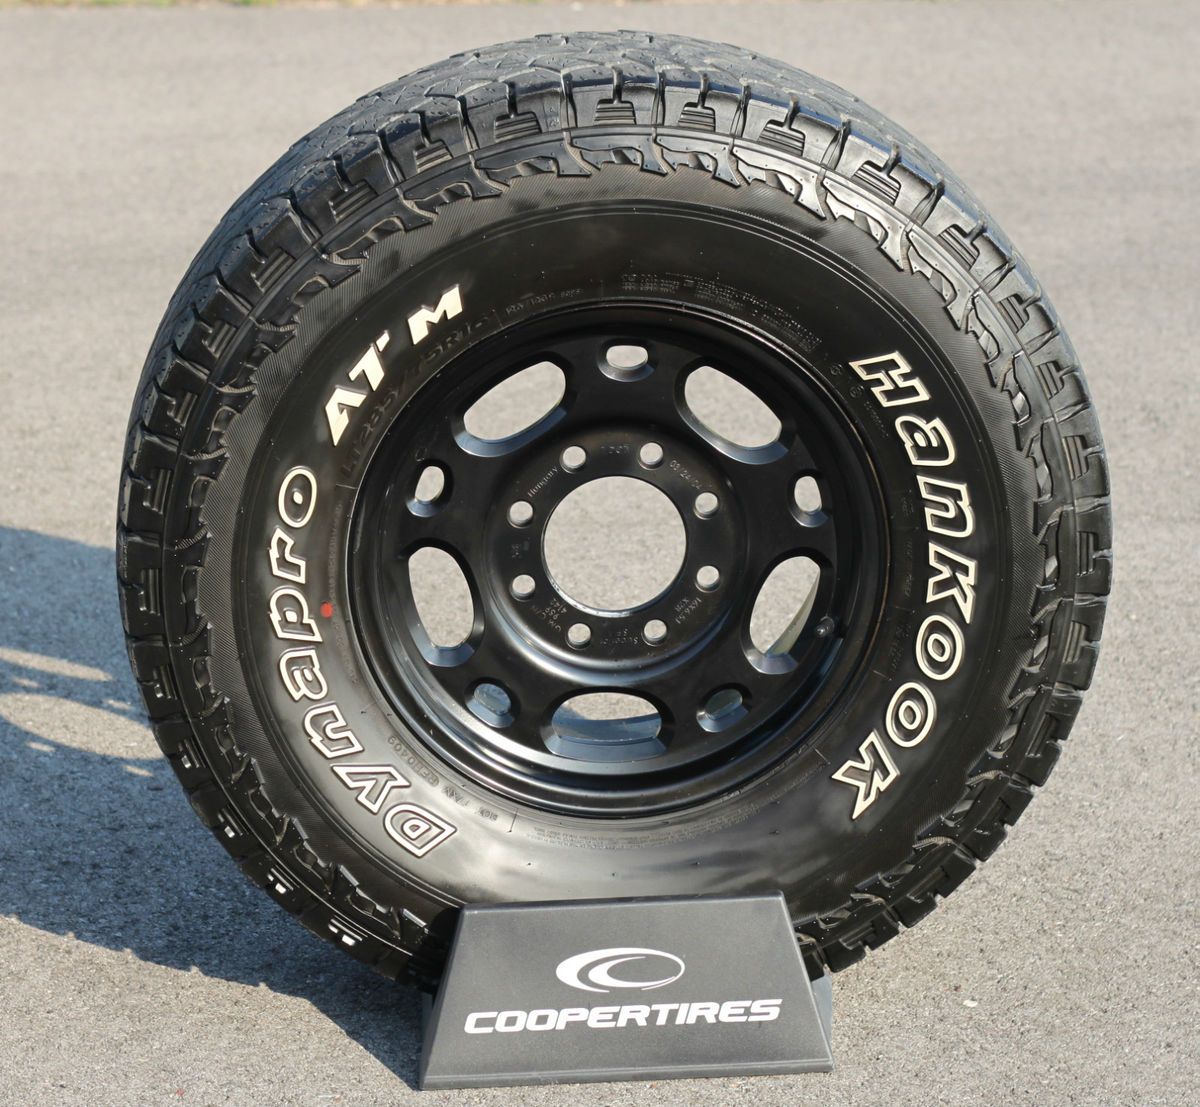  GMC Chevy wheel rims Sierra Silverado 8 lug 6 5 285 75 tires OEM NR